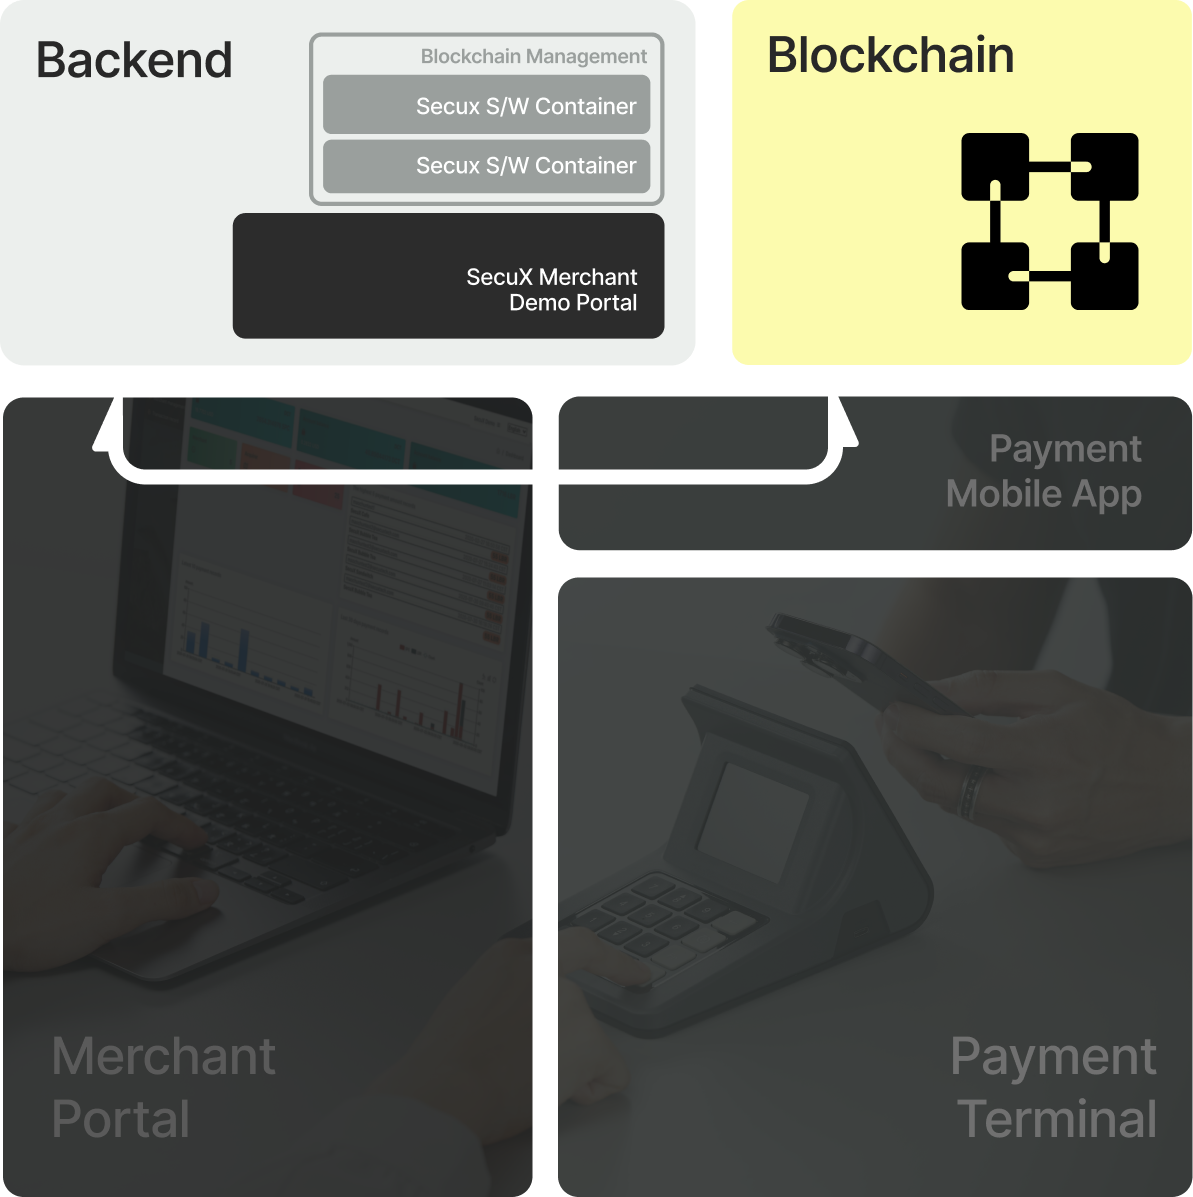 Process transaction in Blockchain